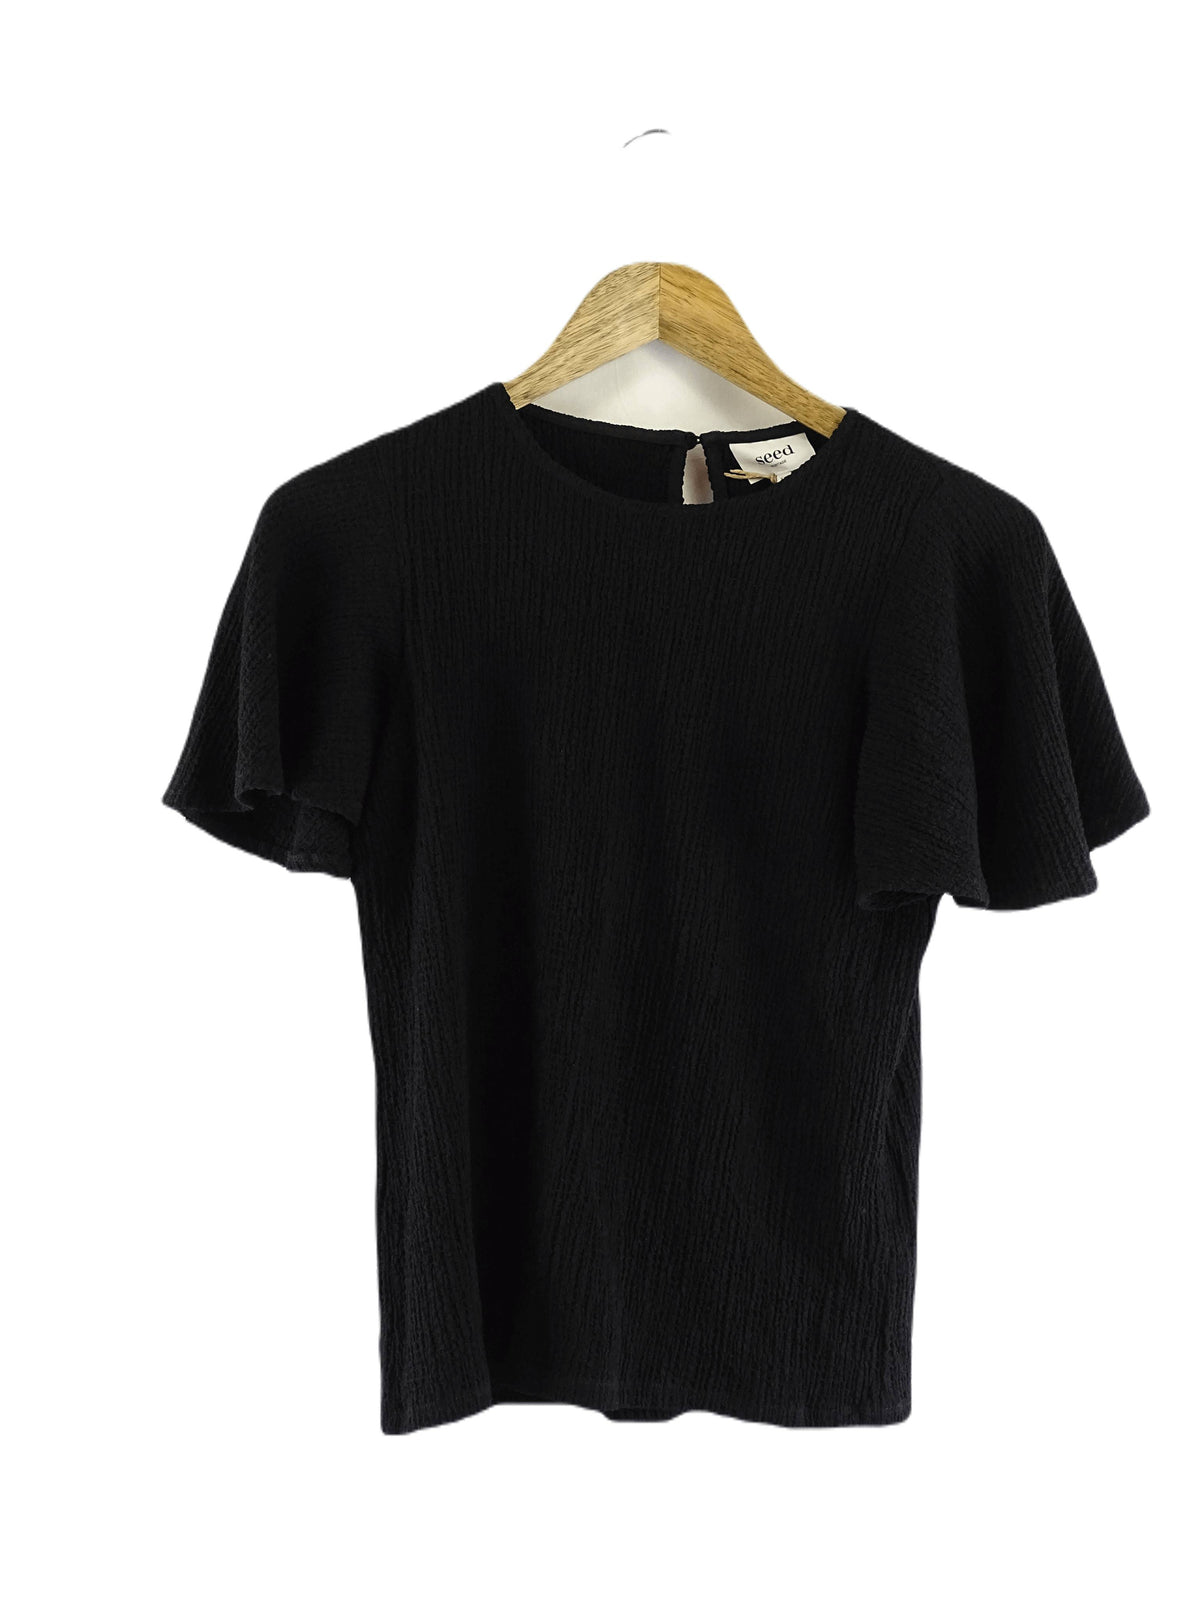 Seed Heritage Black T-Shirt XXS